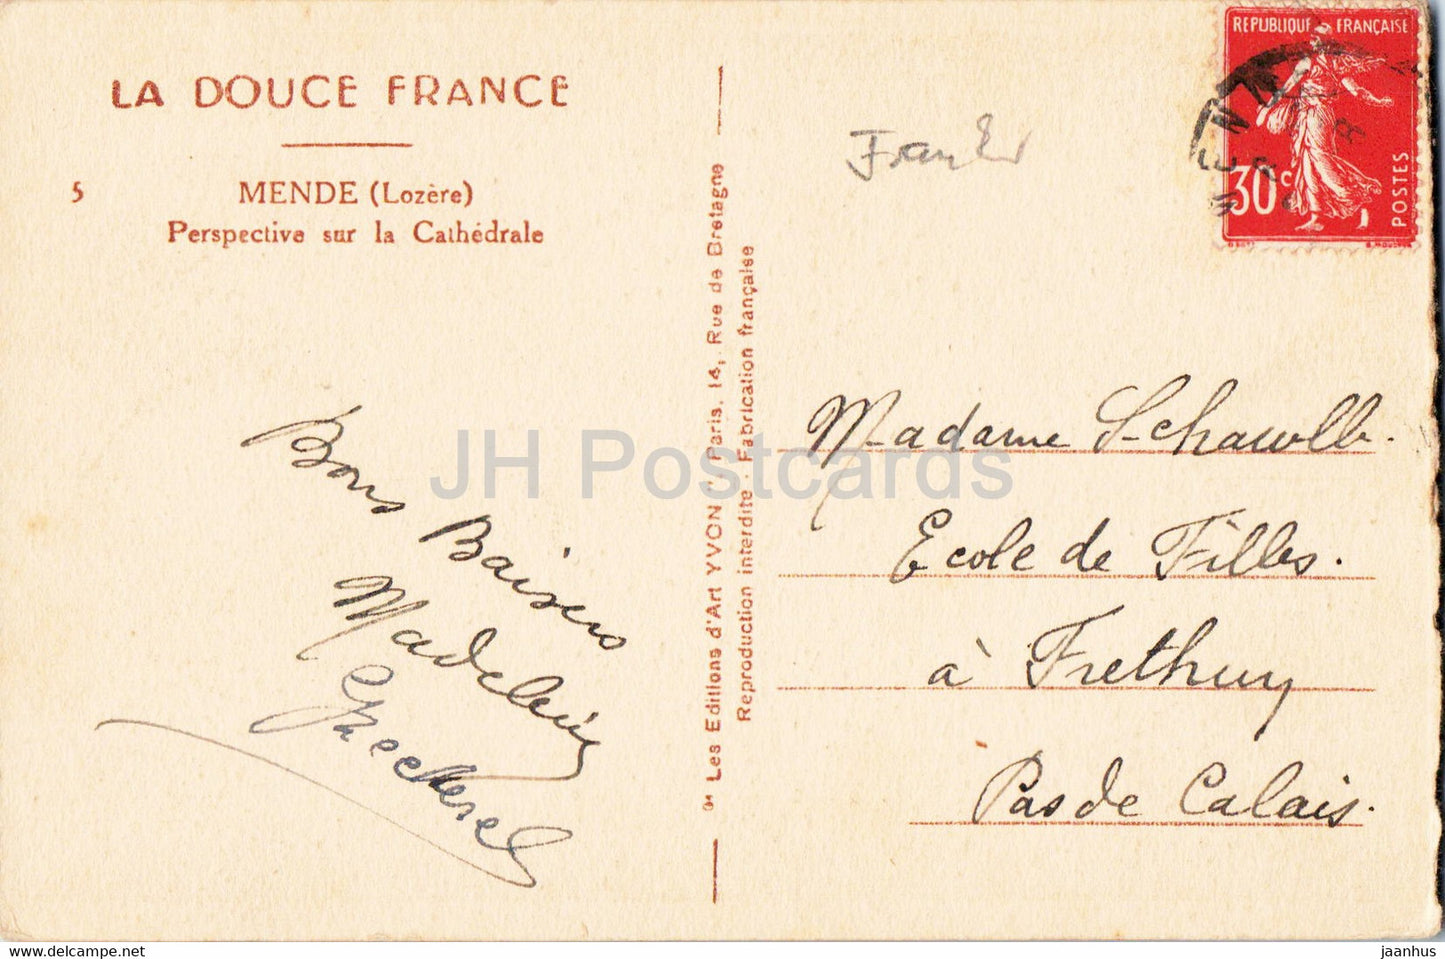 Mende - Perspective sur la Cathedrale - La Douce France - 5 - old postcard - France - used